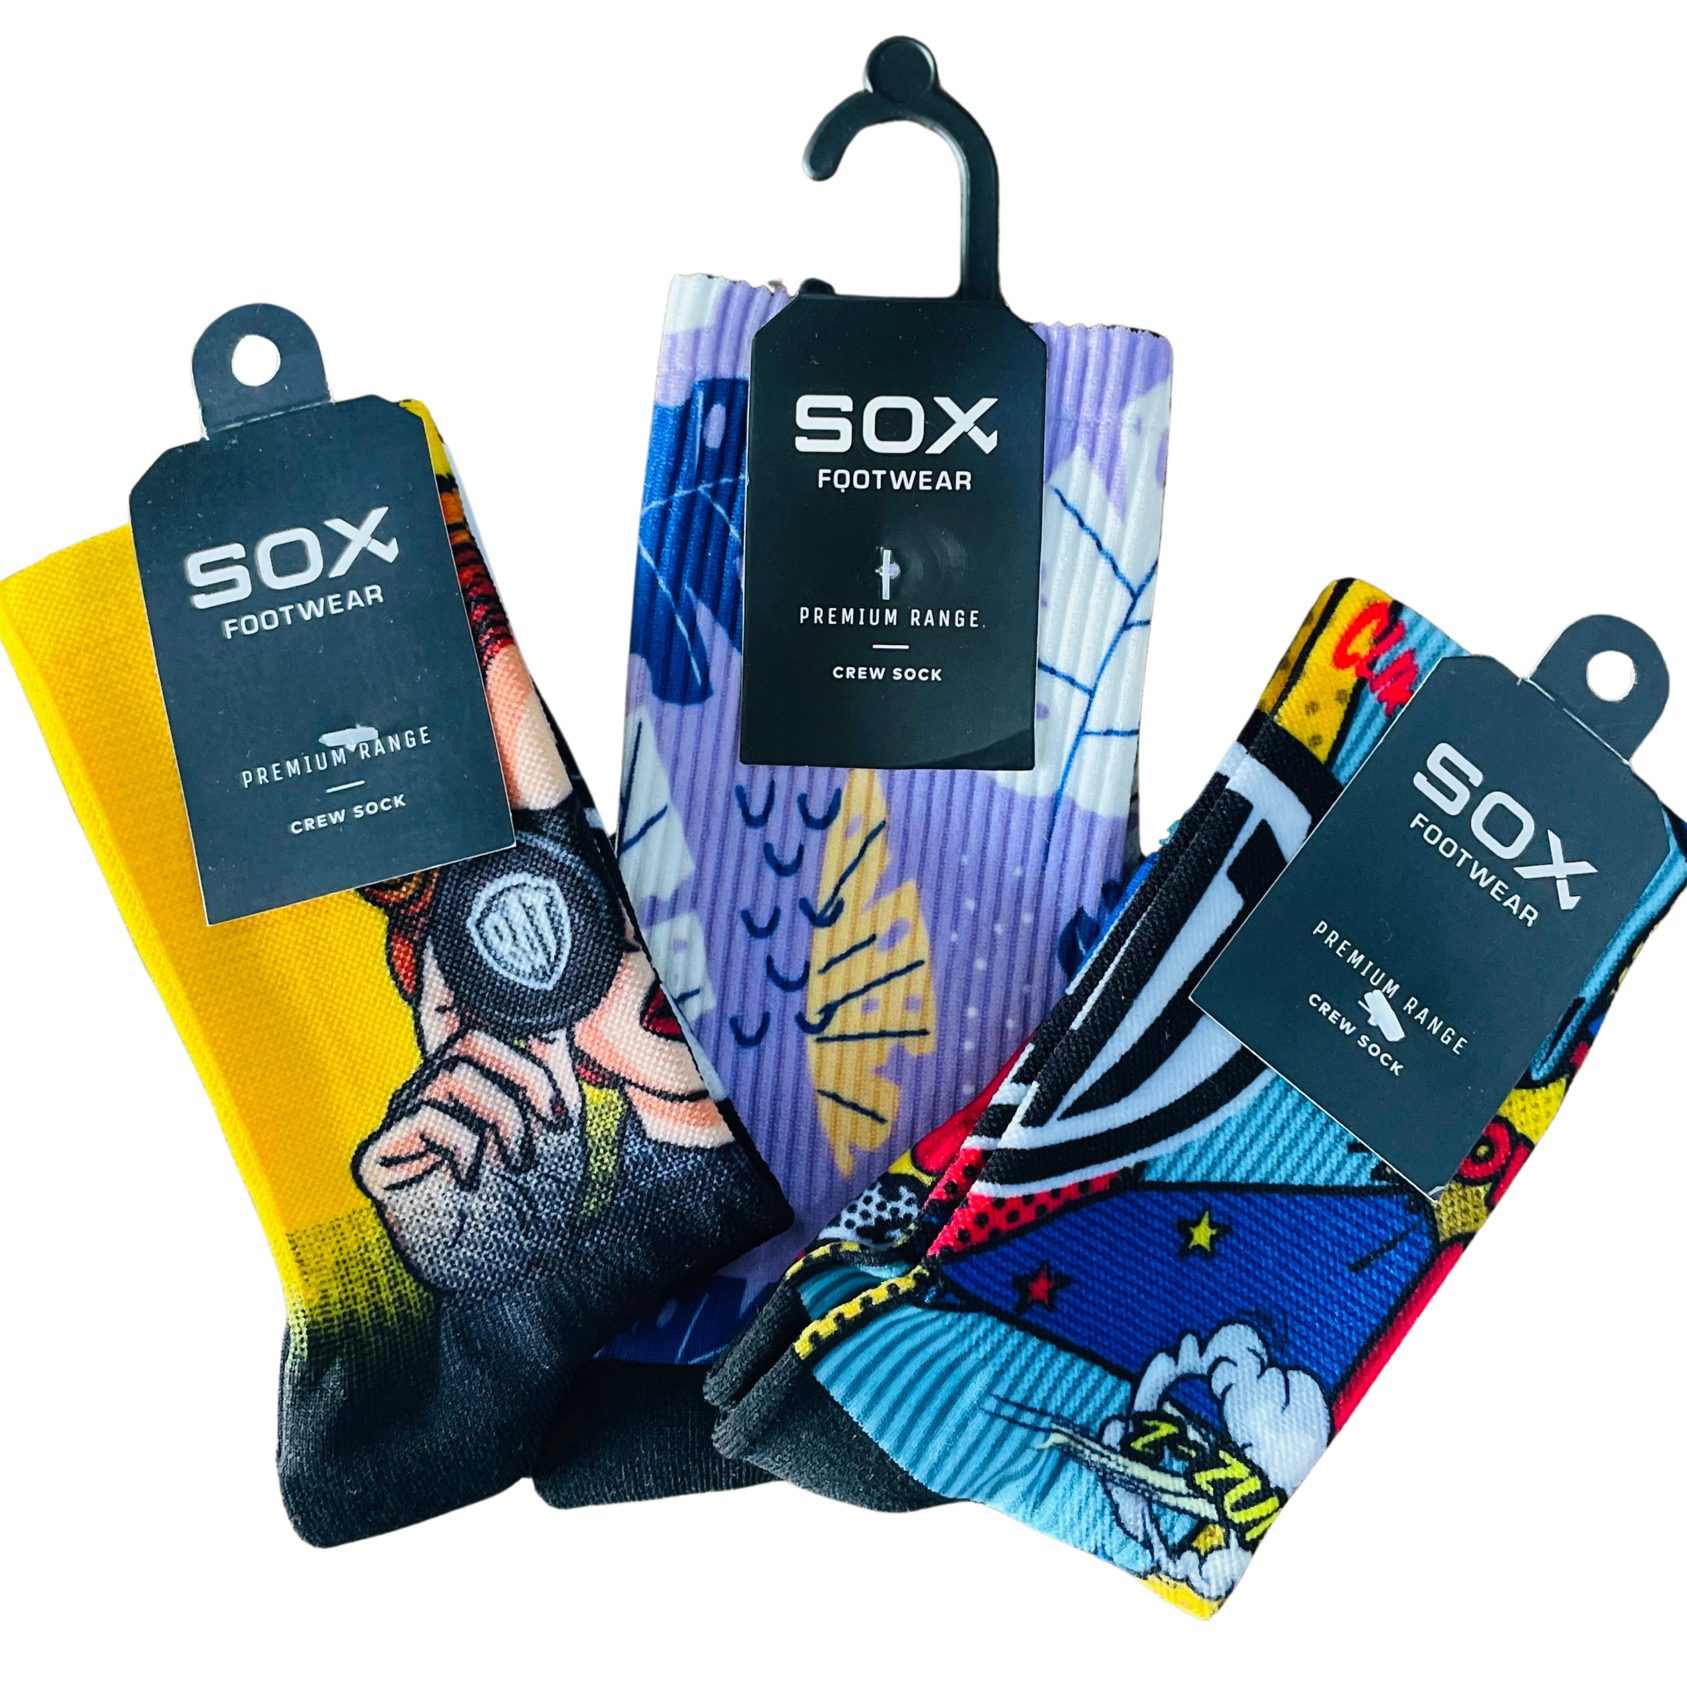 Sox Footwear